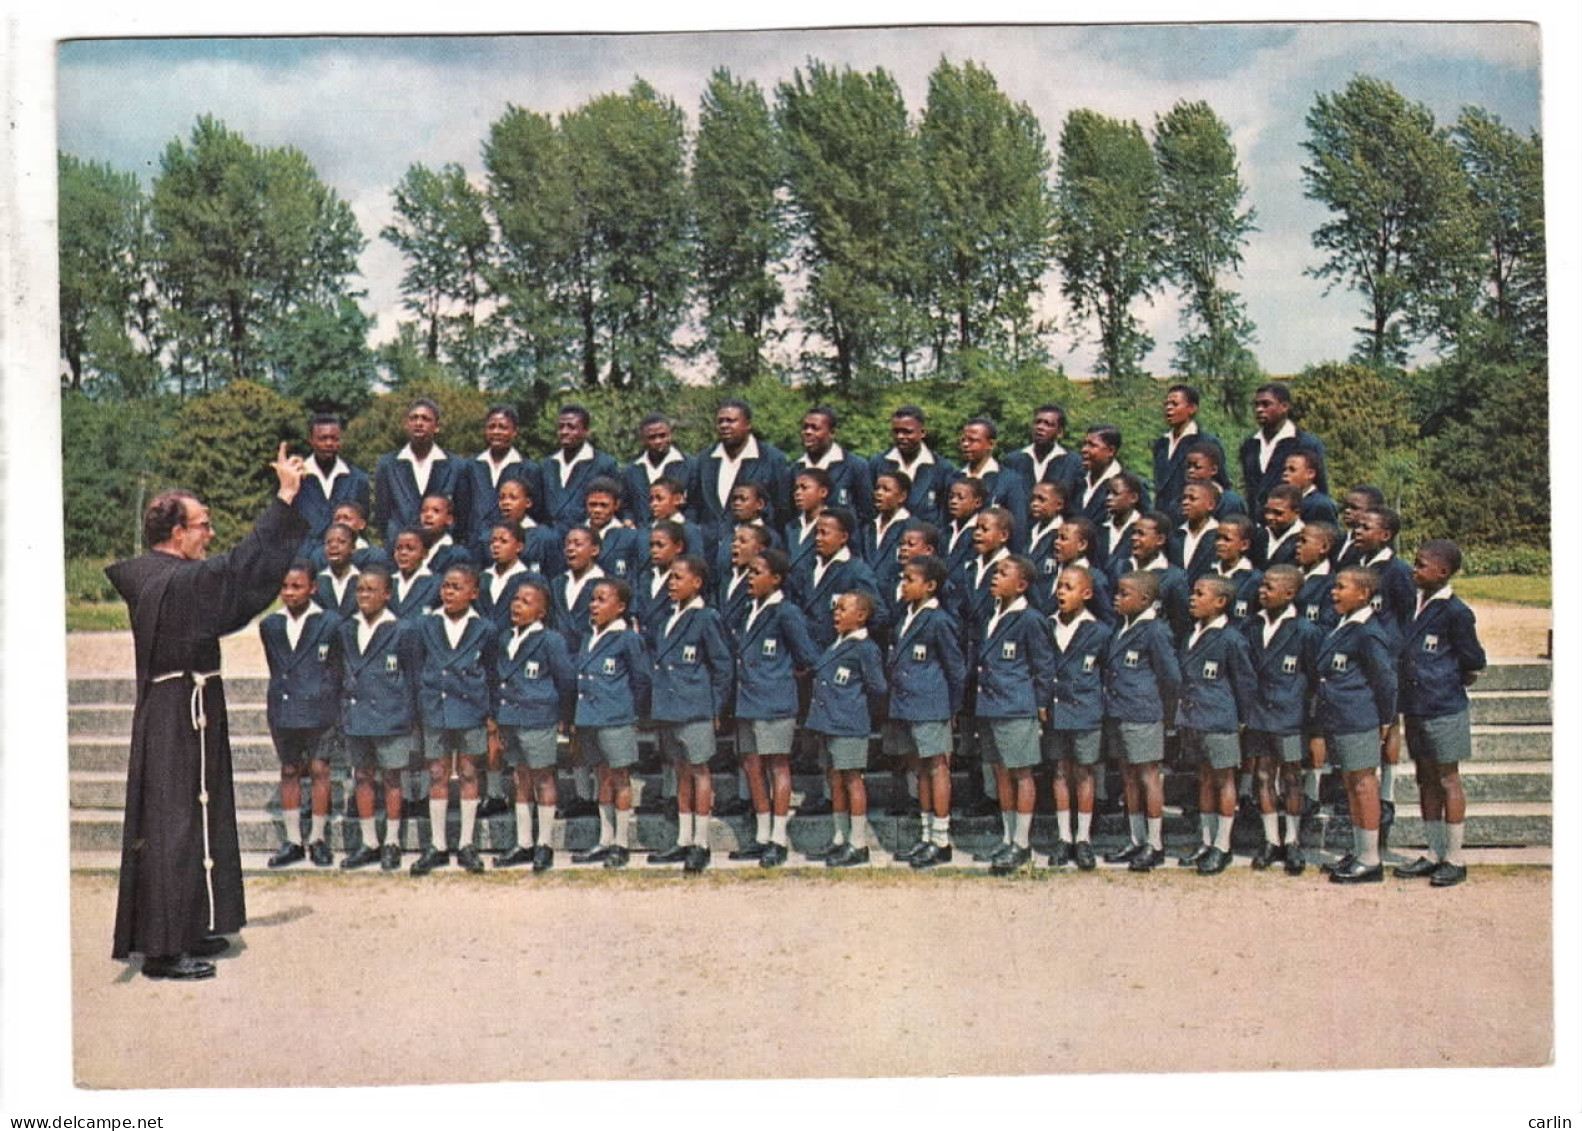 Lot de 8 cartes postales Bruxelles Expo 1958 Pavillon des Missions Catholiques du Congo Belge du Ruanda Burundi